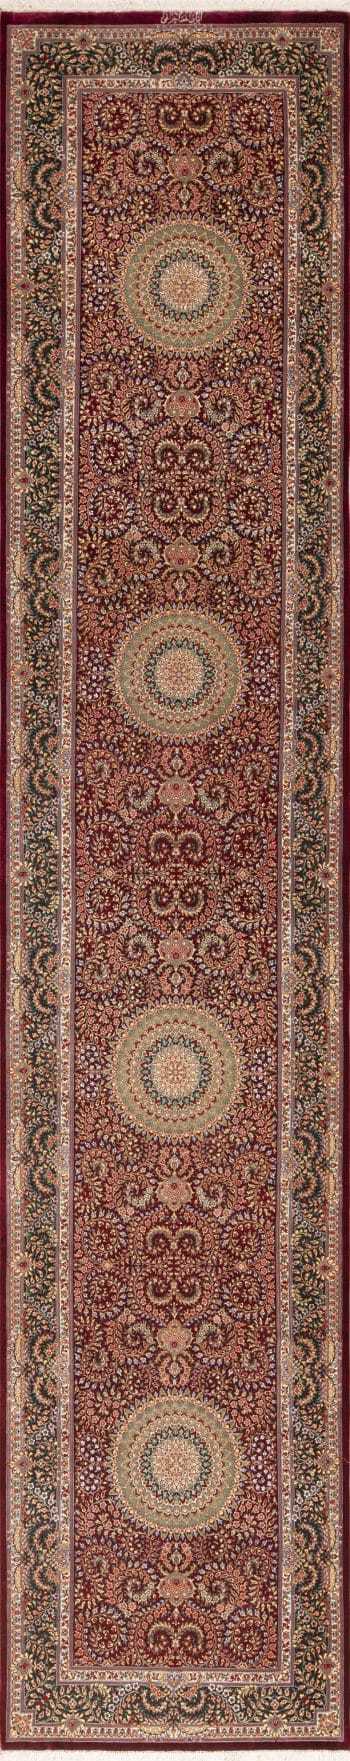 Fine Floral Vintage Persian Gonbad Design Silk Qum Luxury Hallway Runner Rug 72789 by Nazmiyal Antique Rugs